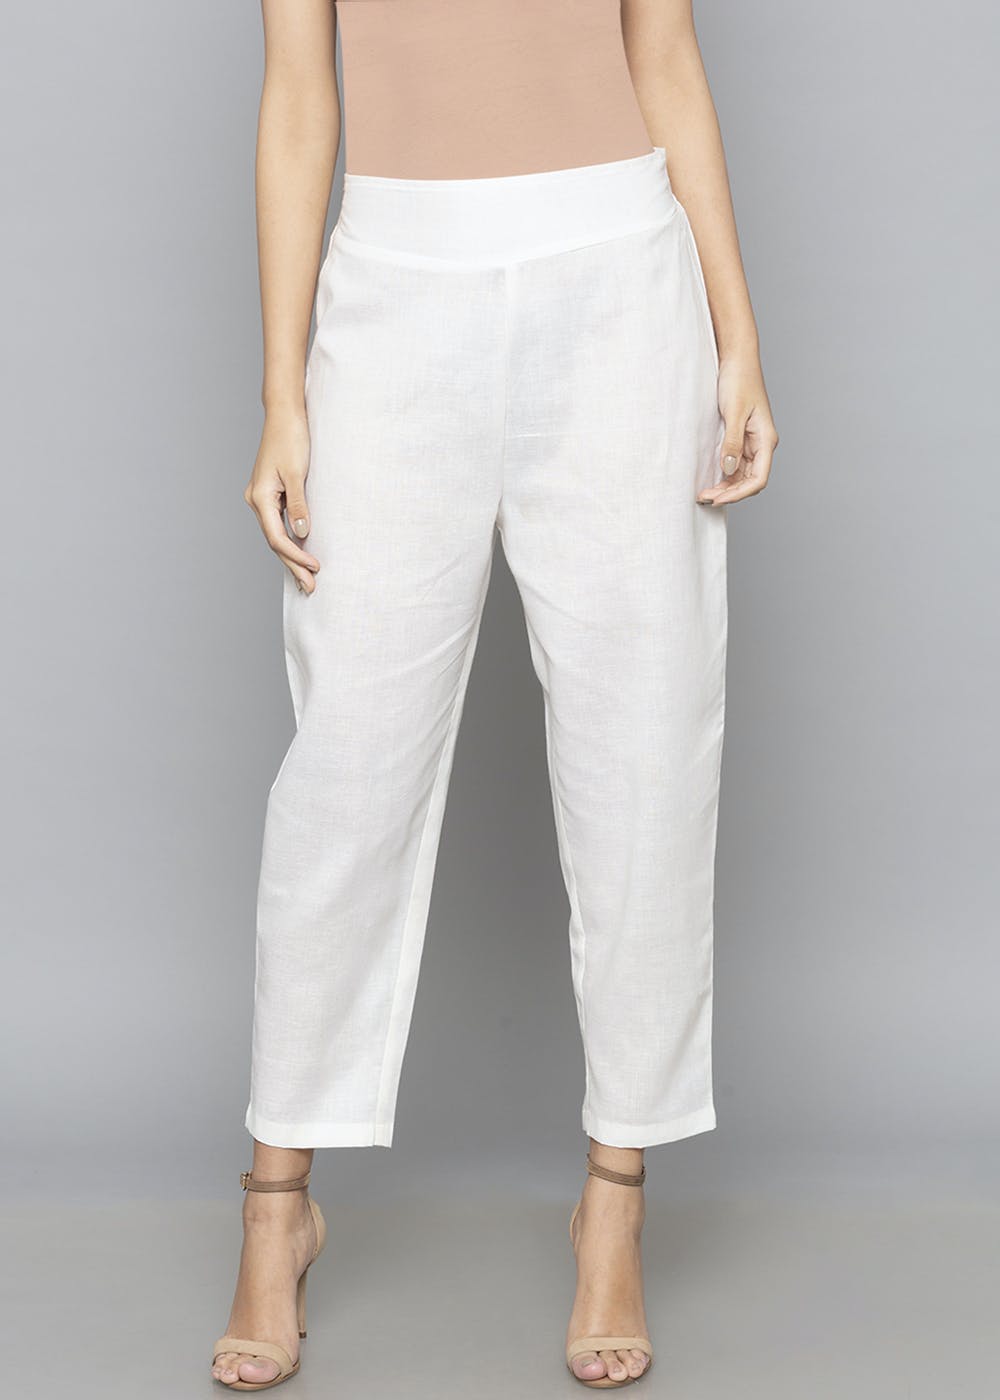 Buy White Pants for Women by Rangriti Online | Ajio.com